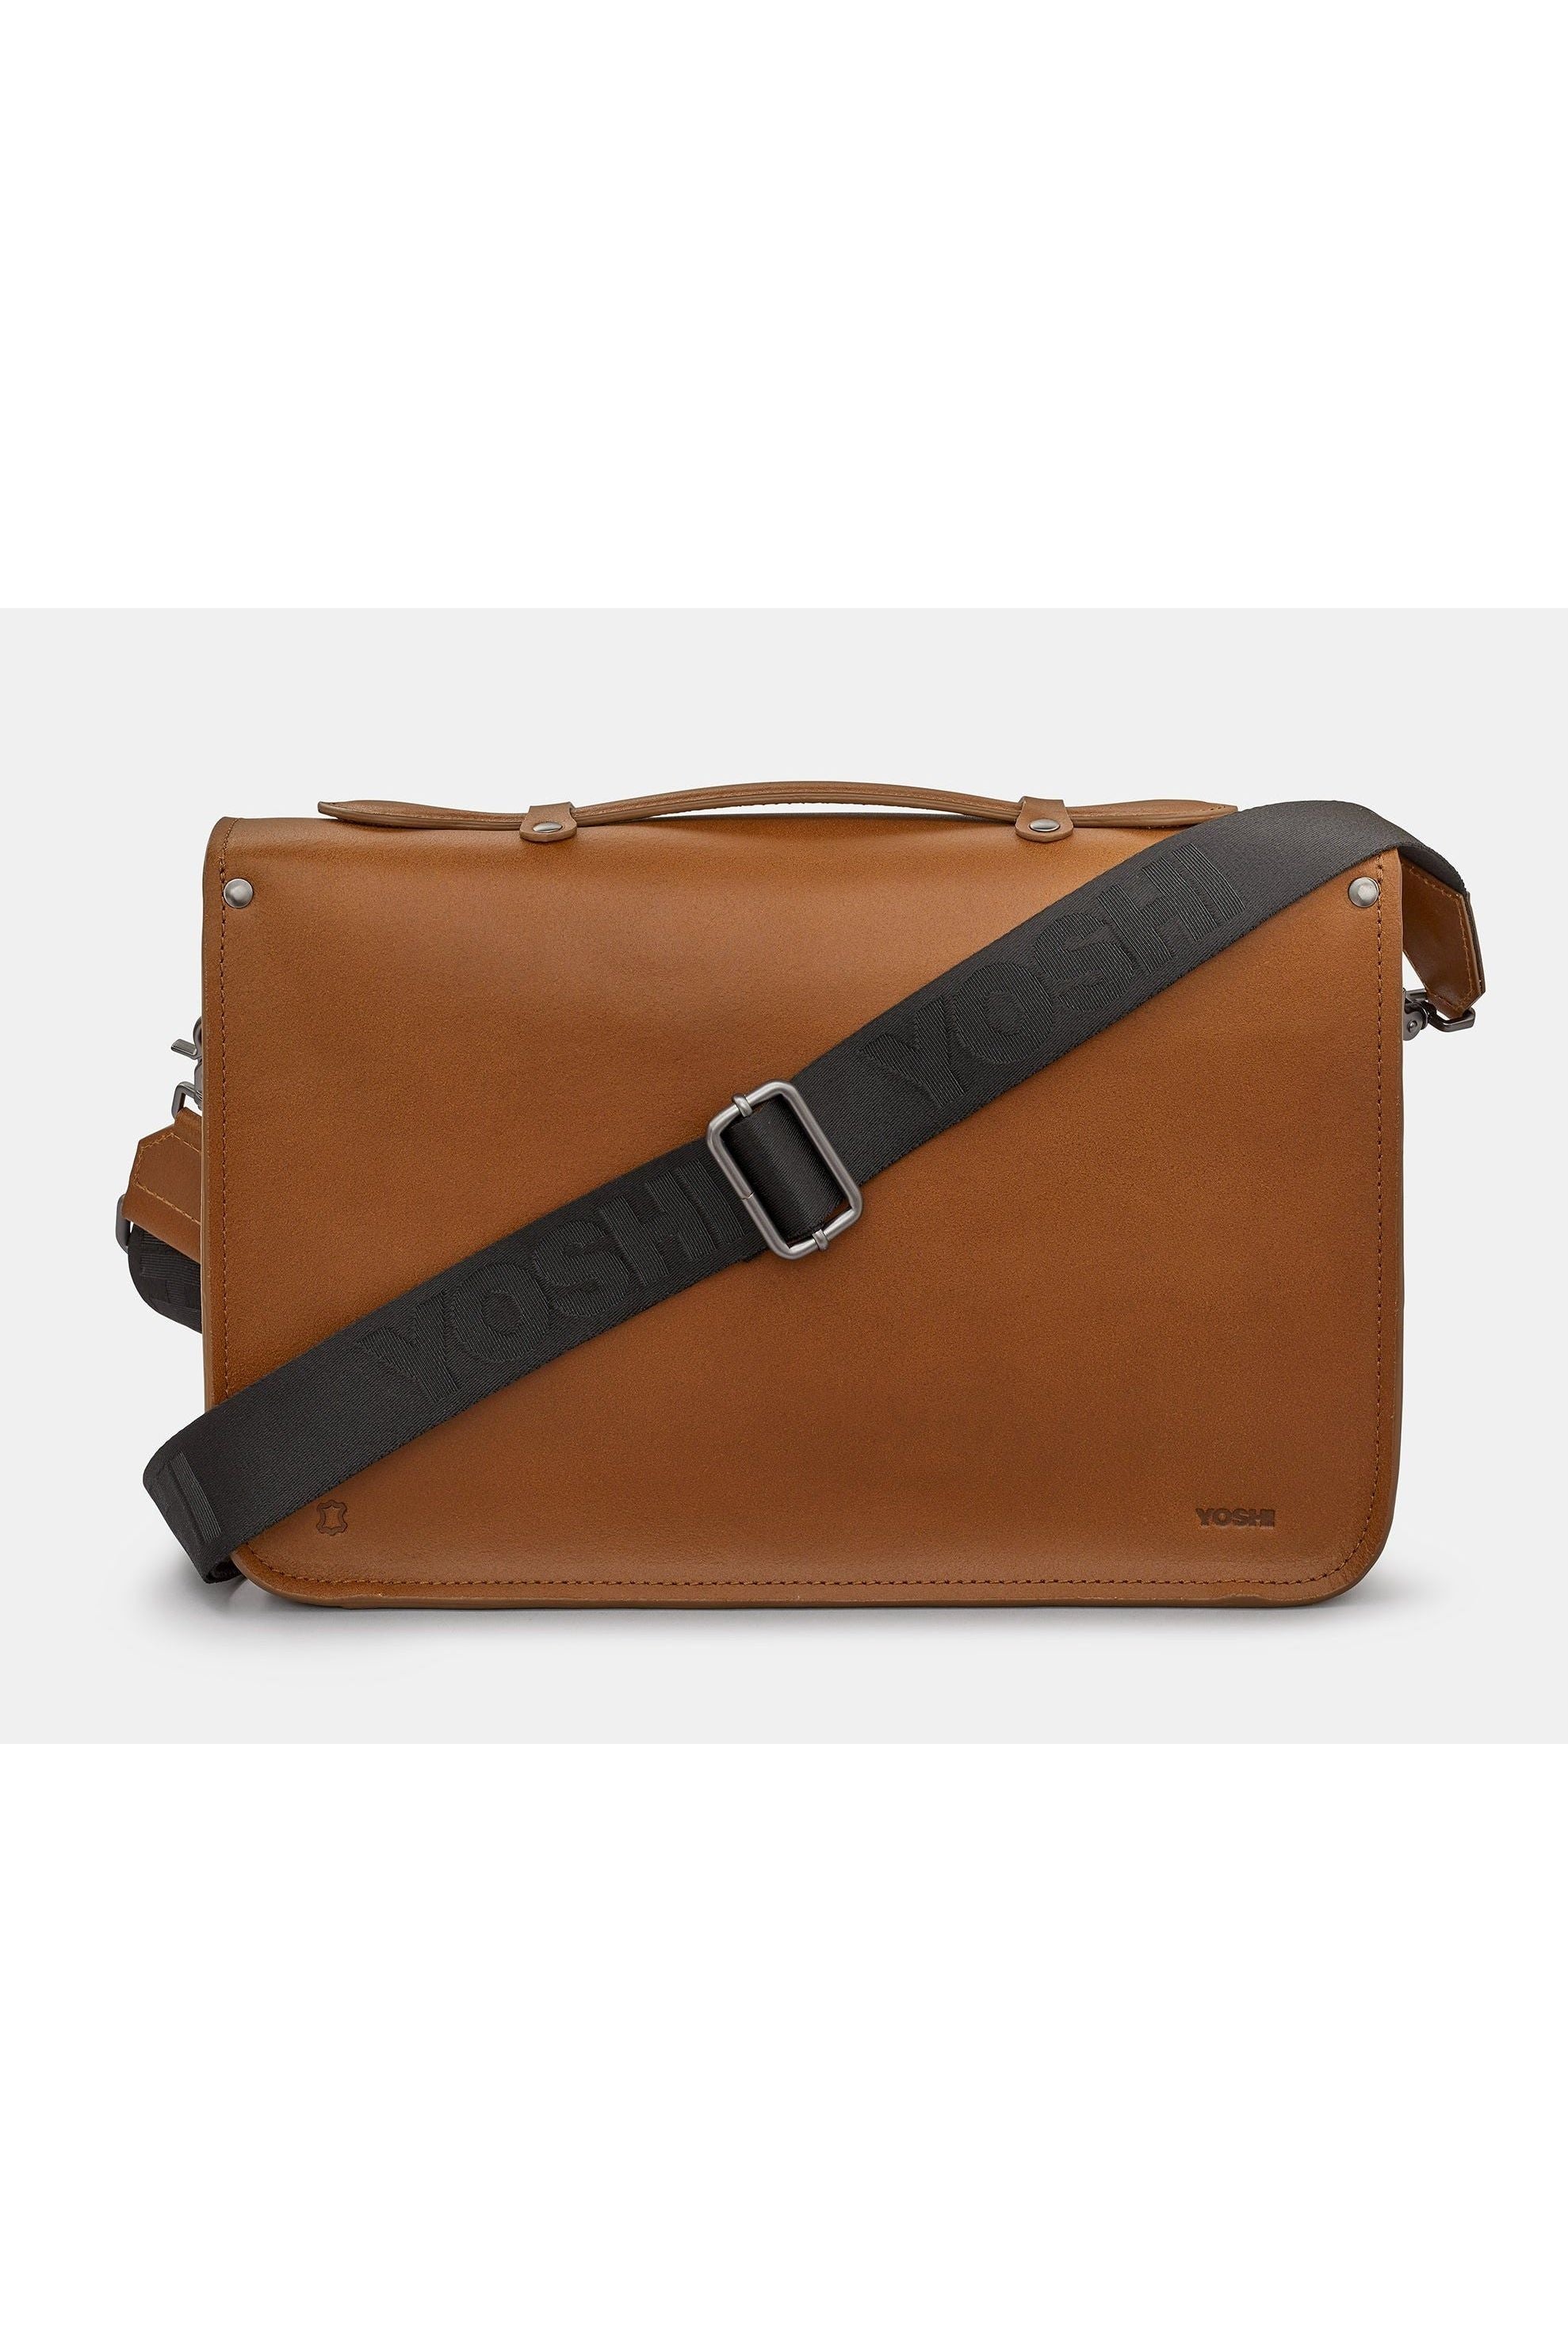 Yoshi Belforte leather Satchel bag in brown